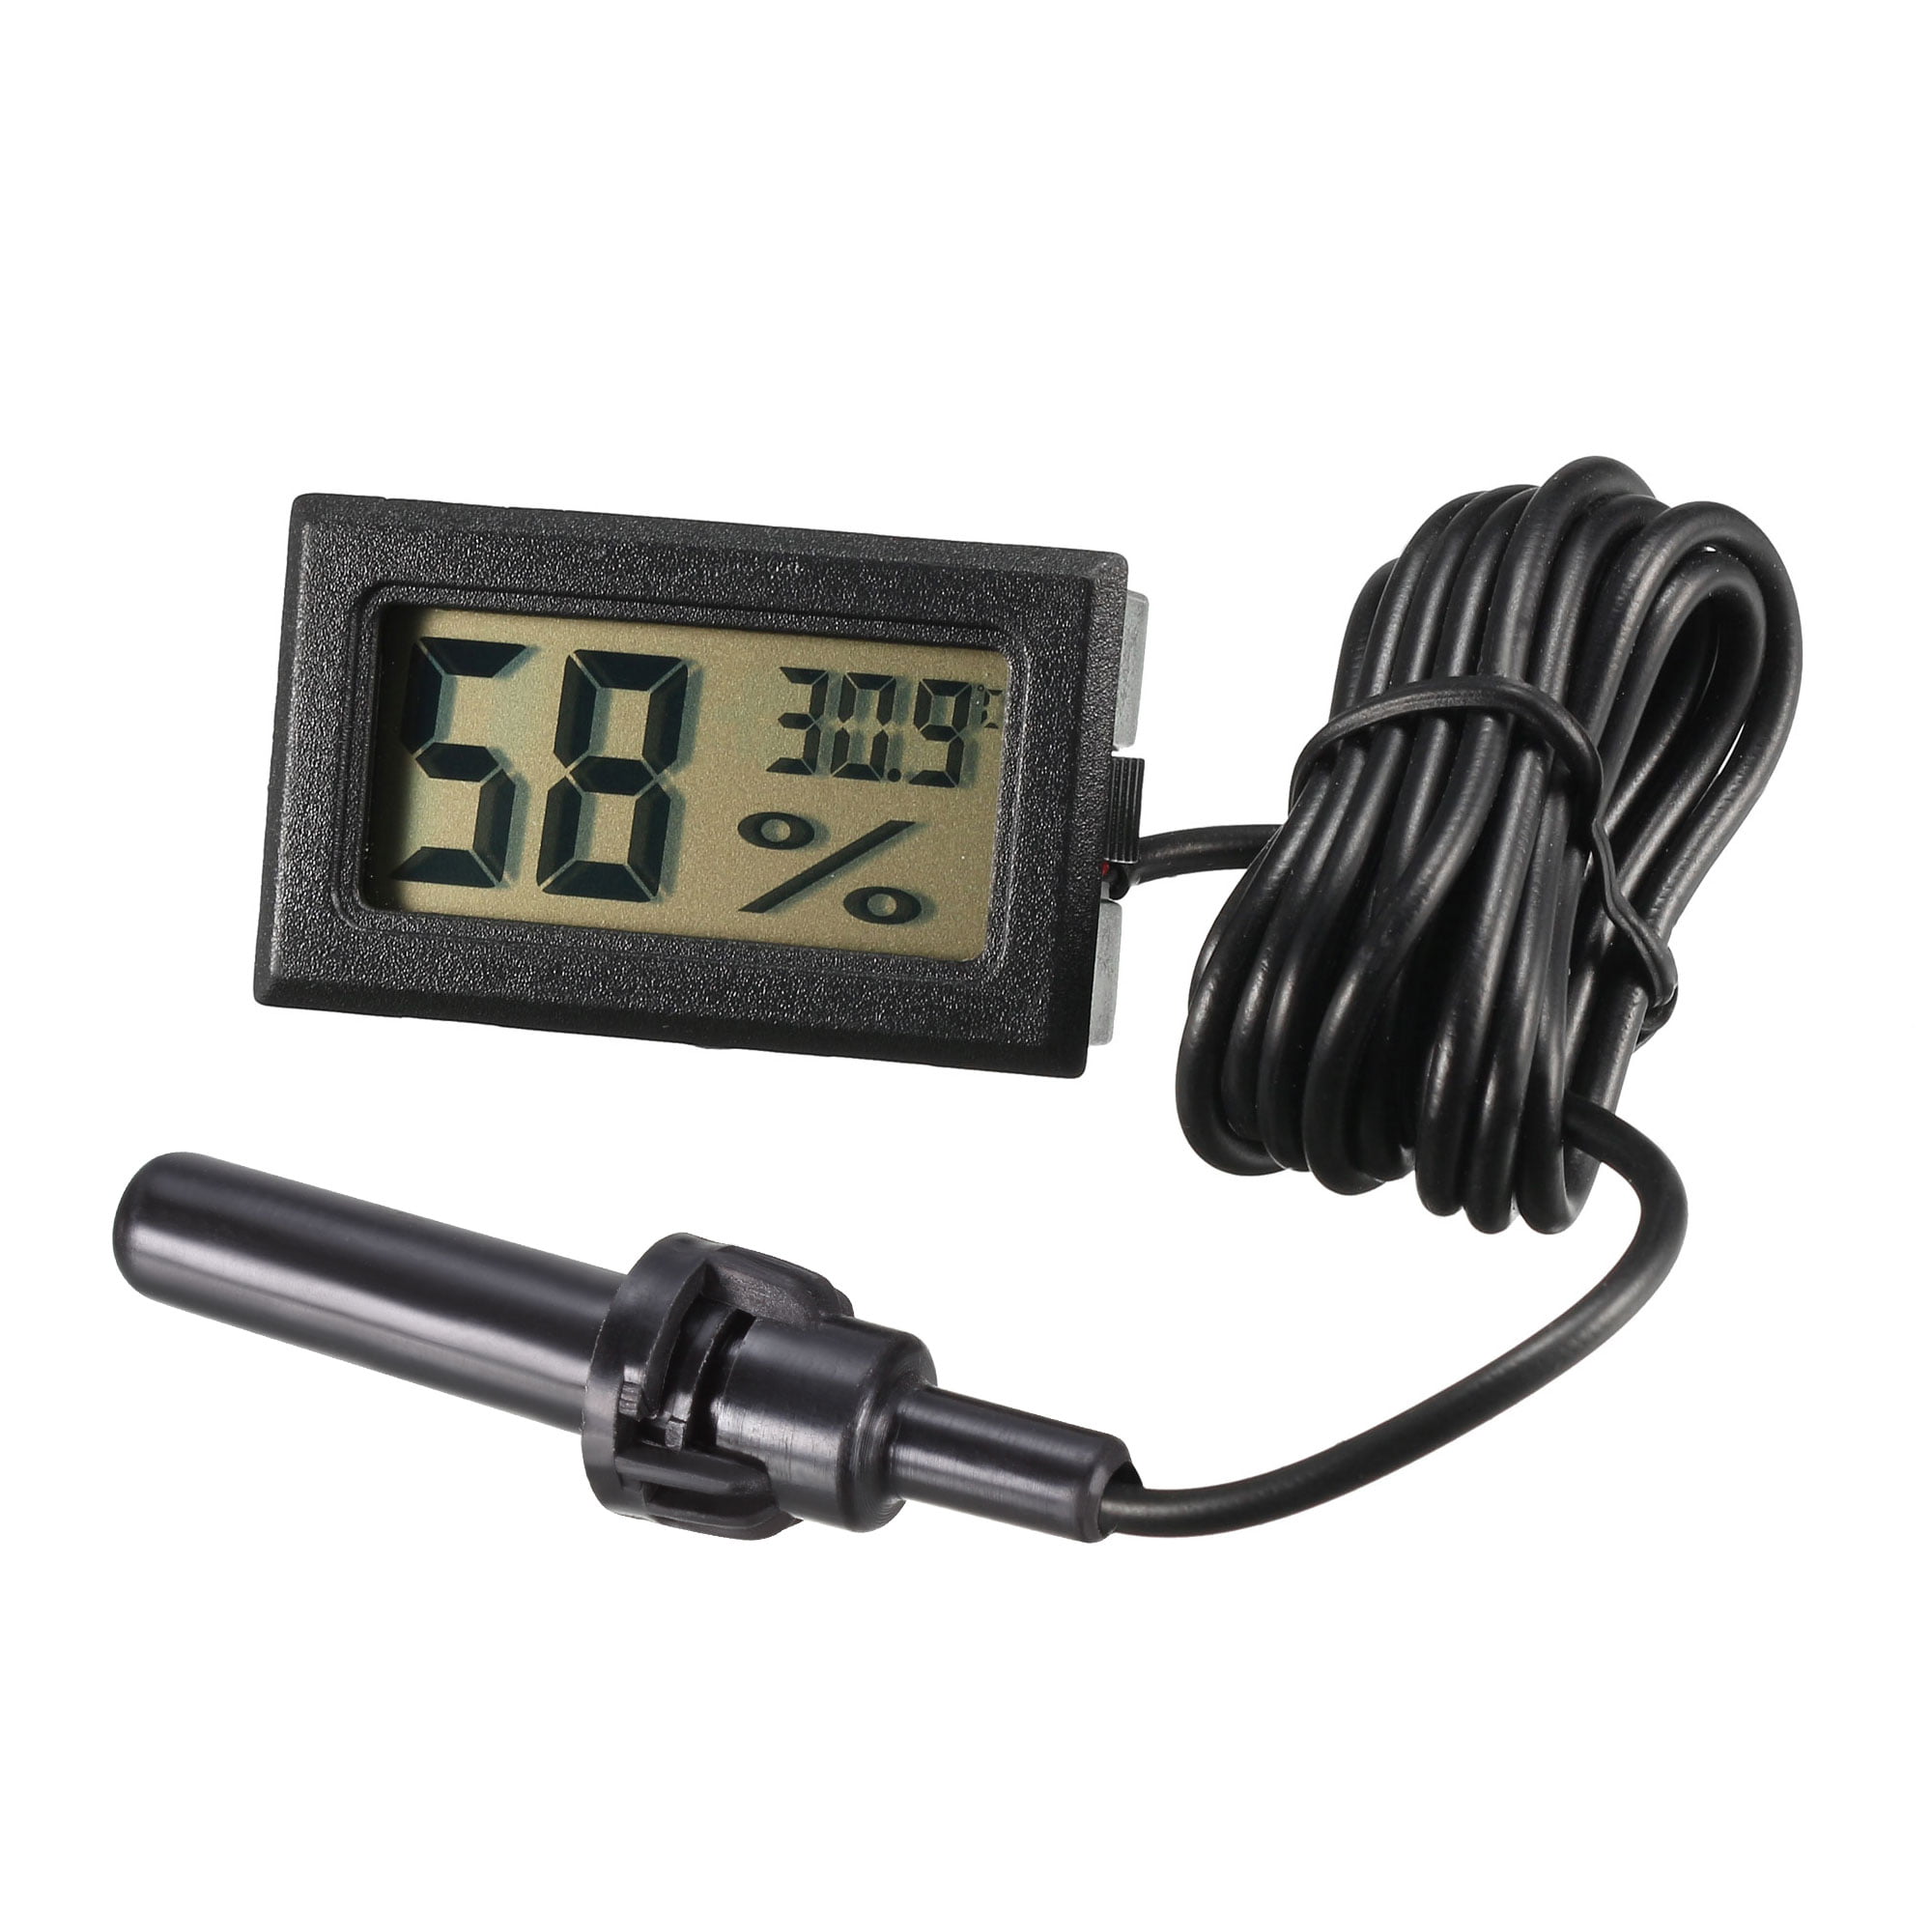 Temperature Display Meter Black Gauge Mini Humidity Thermometer Hygrometer LCD